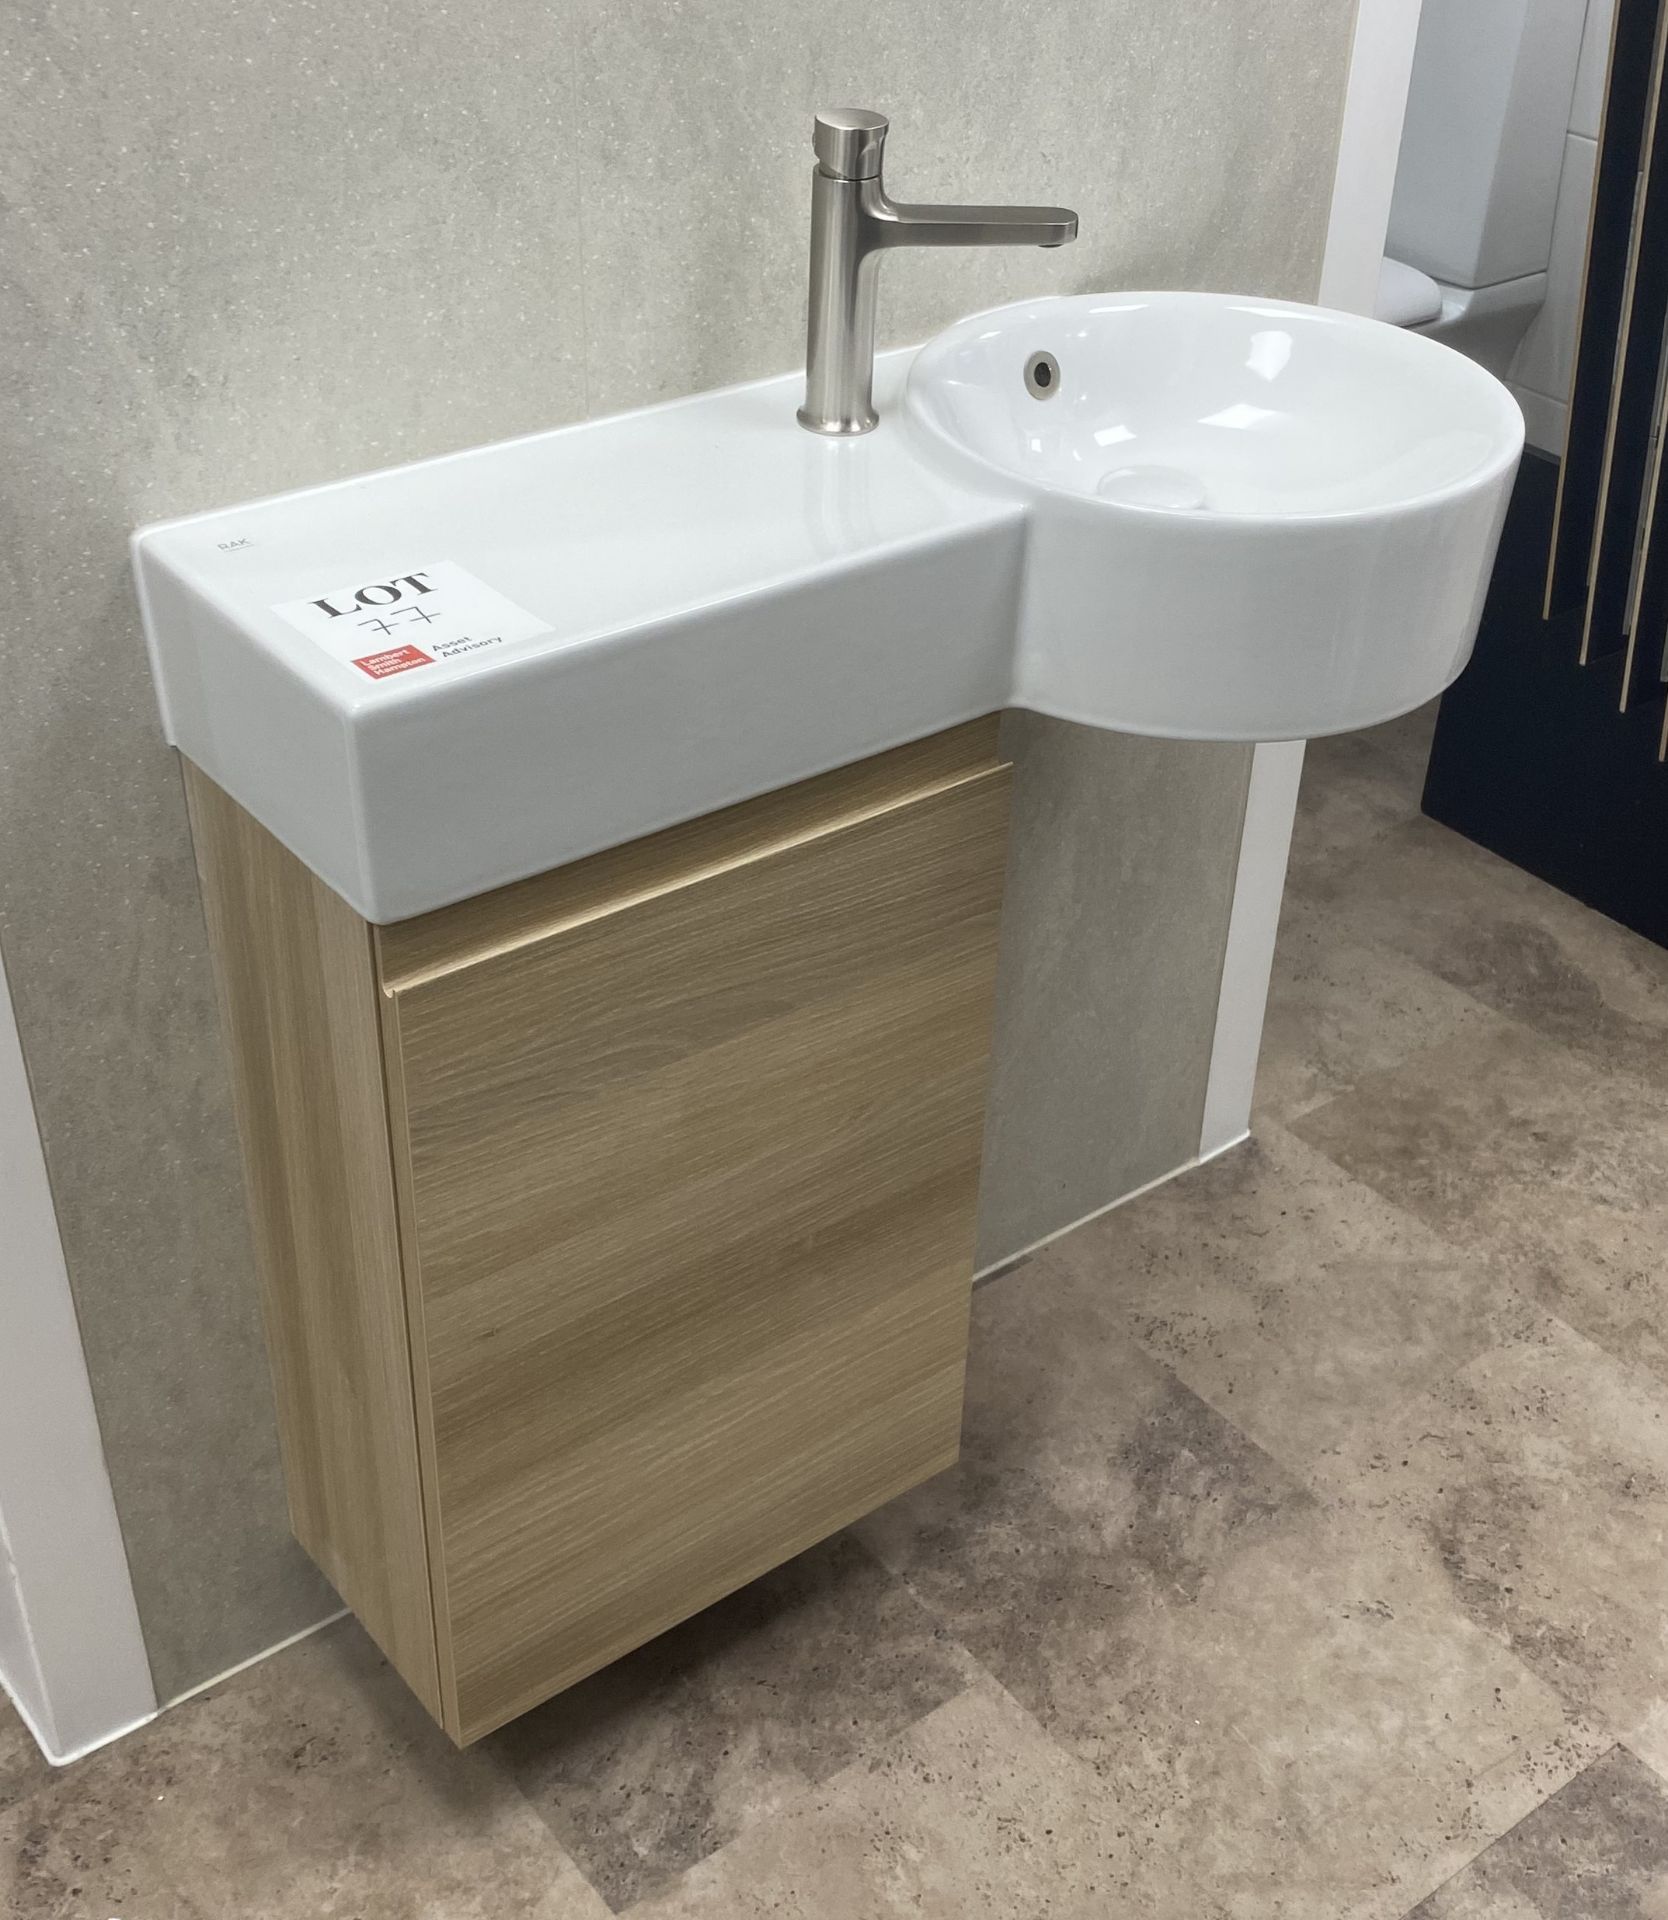 Rak Ceramics single sink basin unit and mixer tap with wood effect laminate under counter cupboard